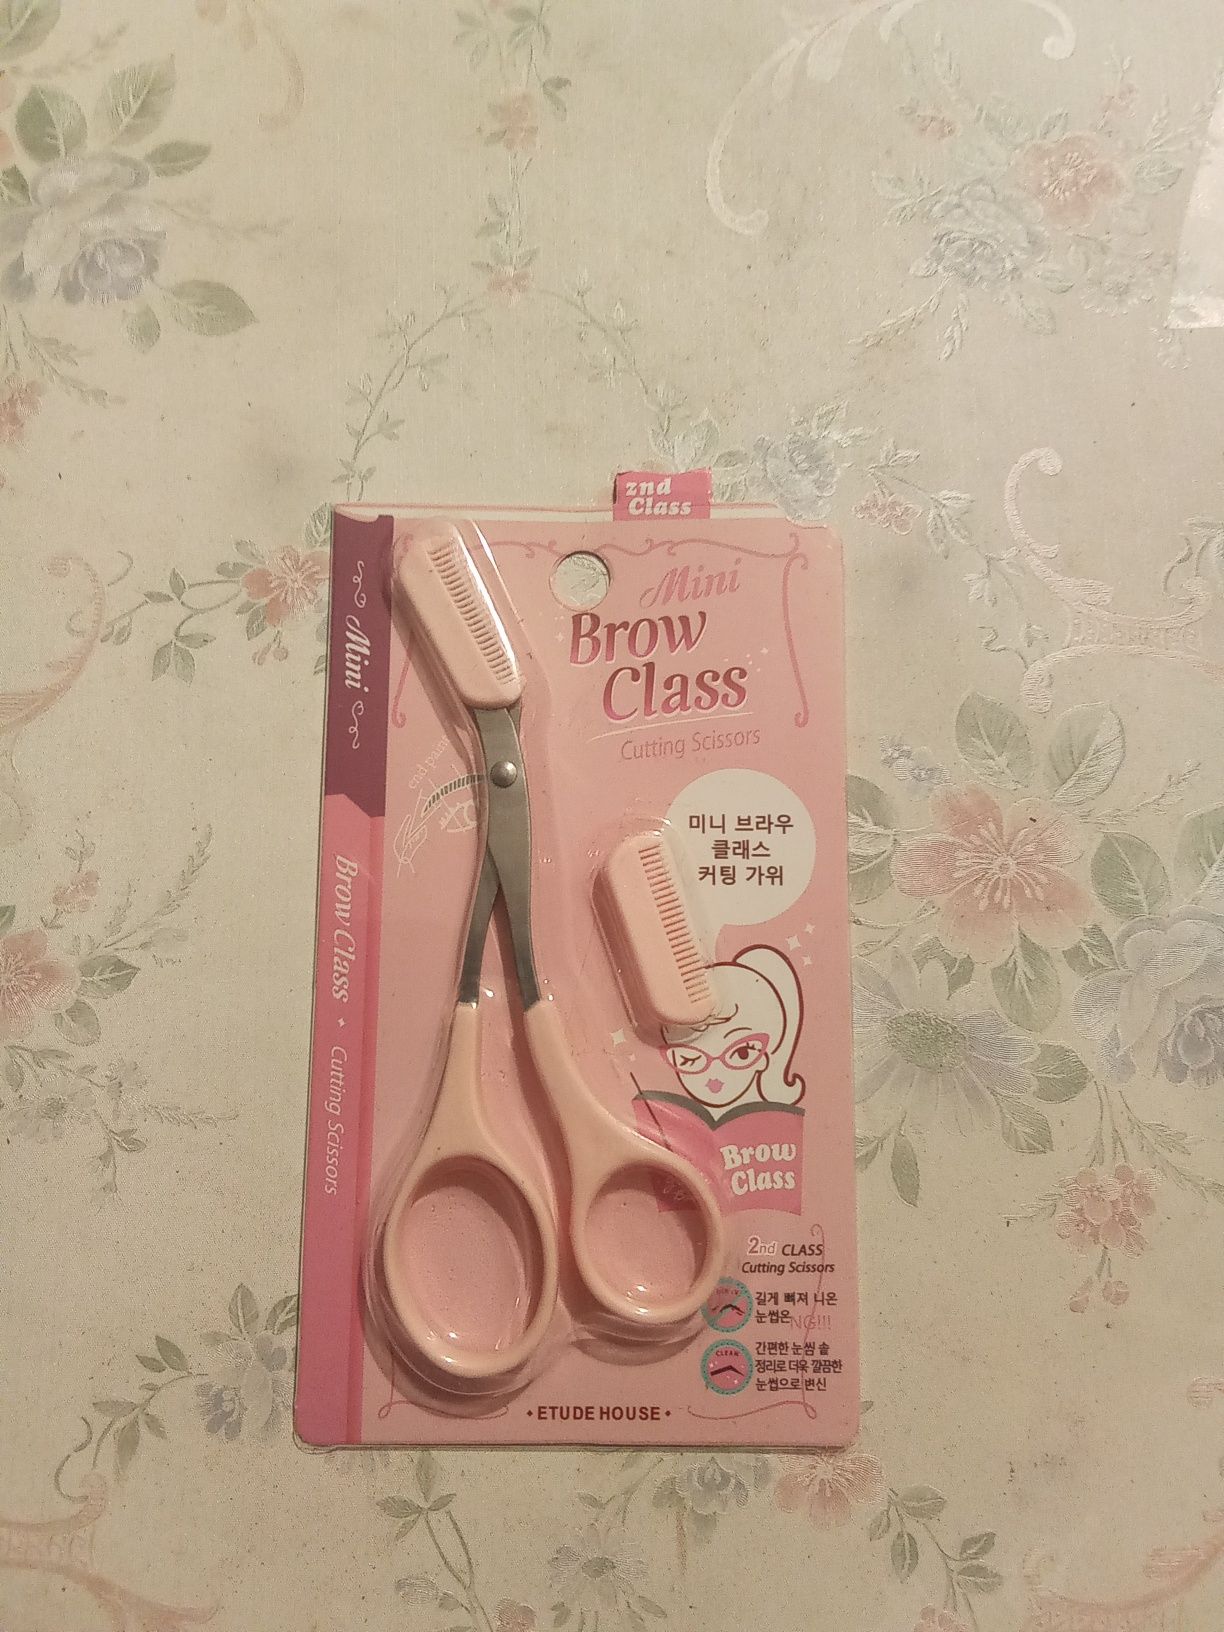 Mini brow class cutting scissors